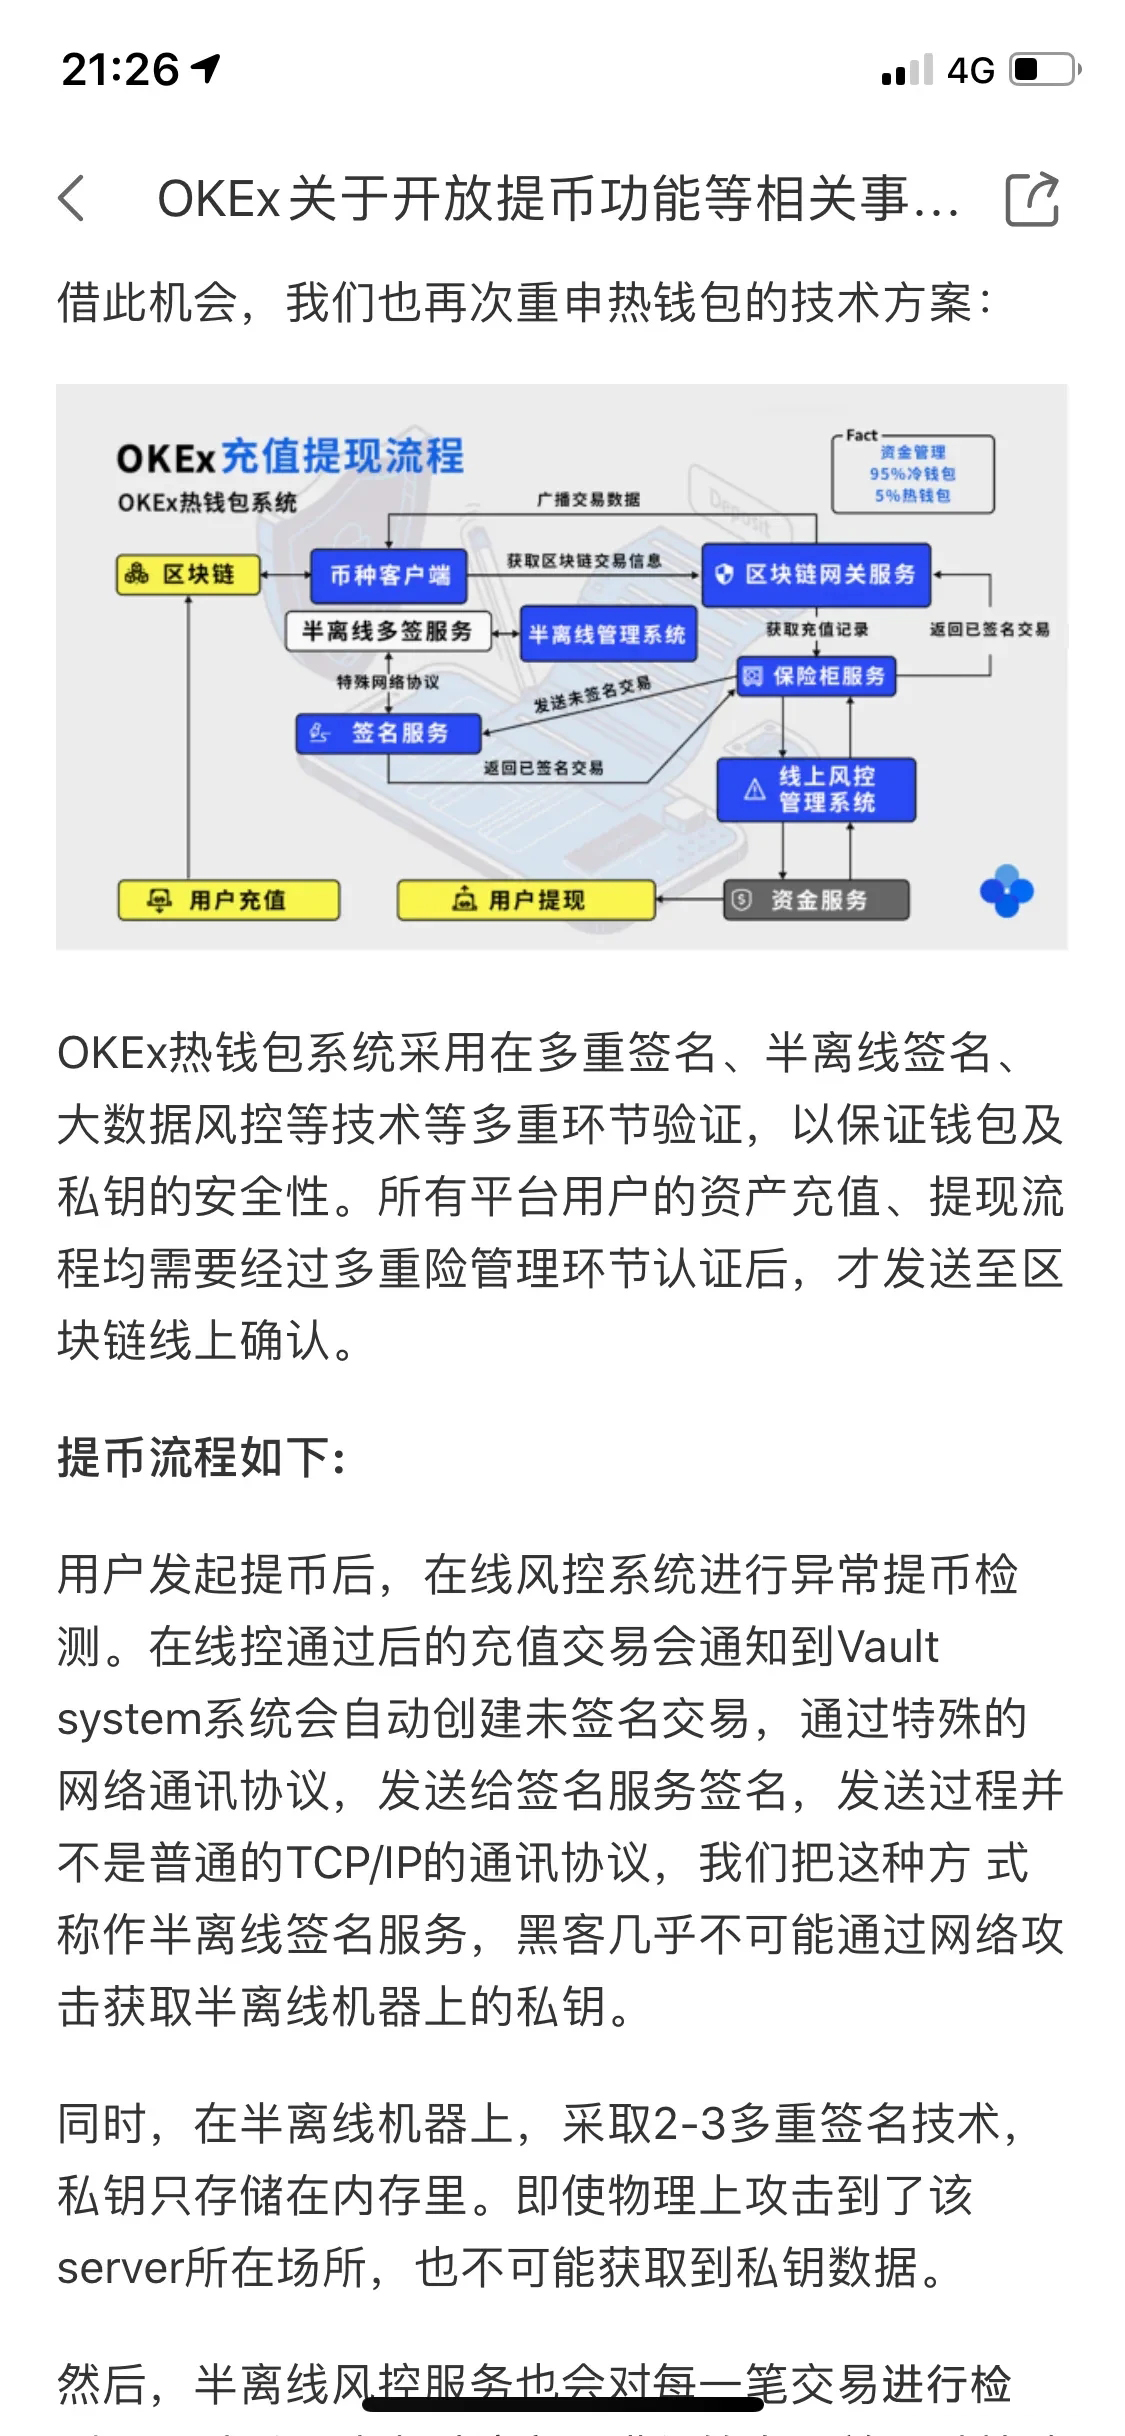 Okex官宣正式开放提币日期为11月27号。